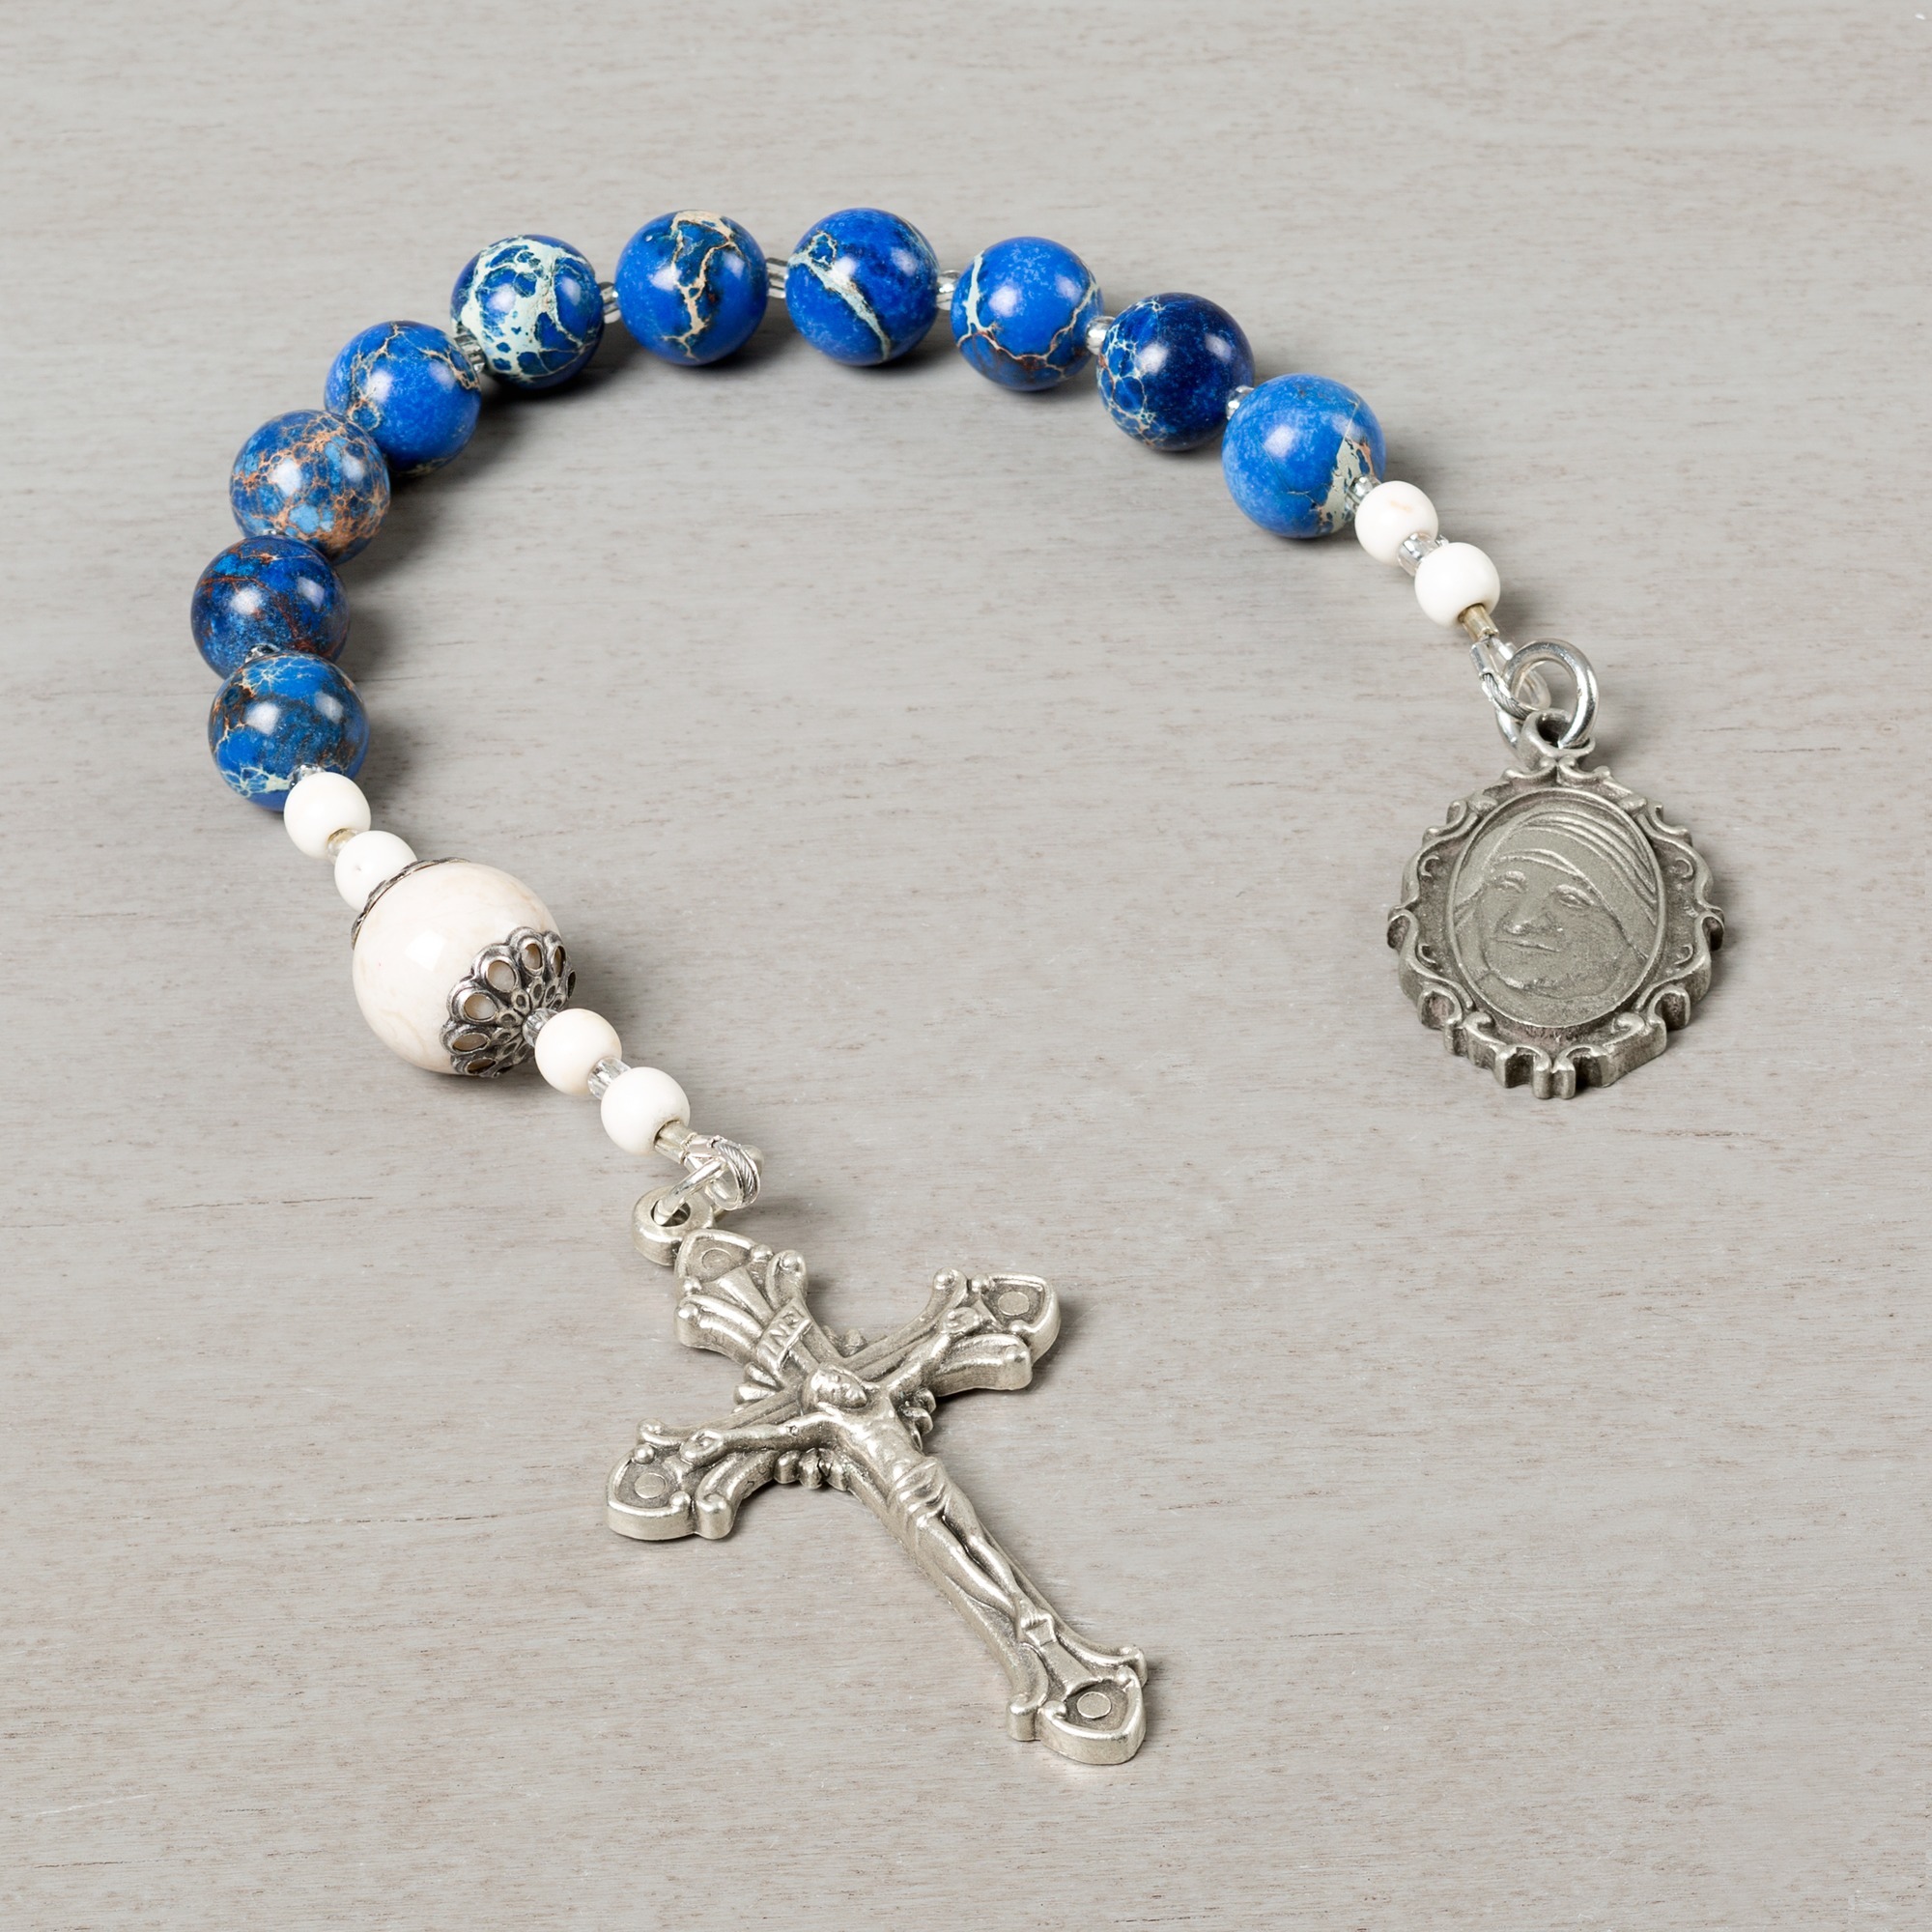 December Birth Month Bead Rosary Bracelet with Patron Saint Petite Charm 7 1/2 Inch